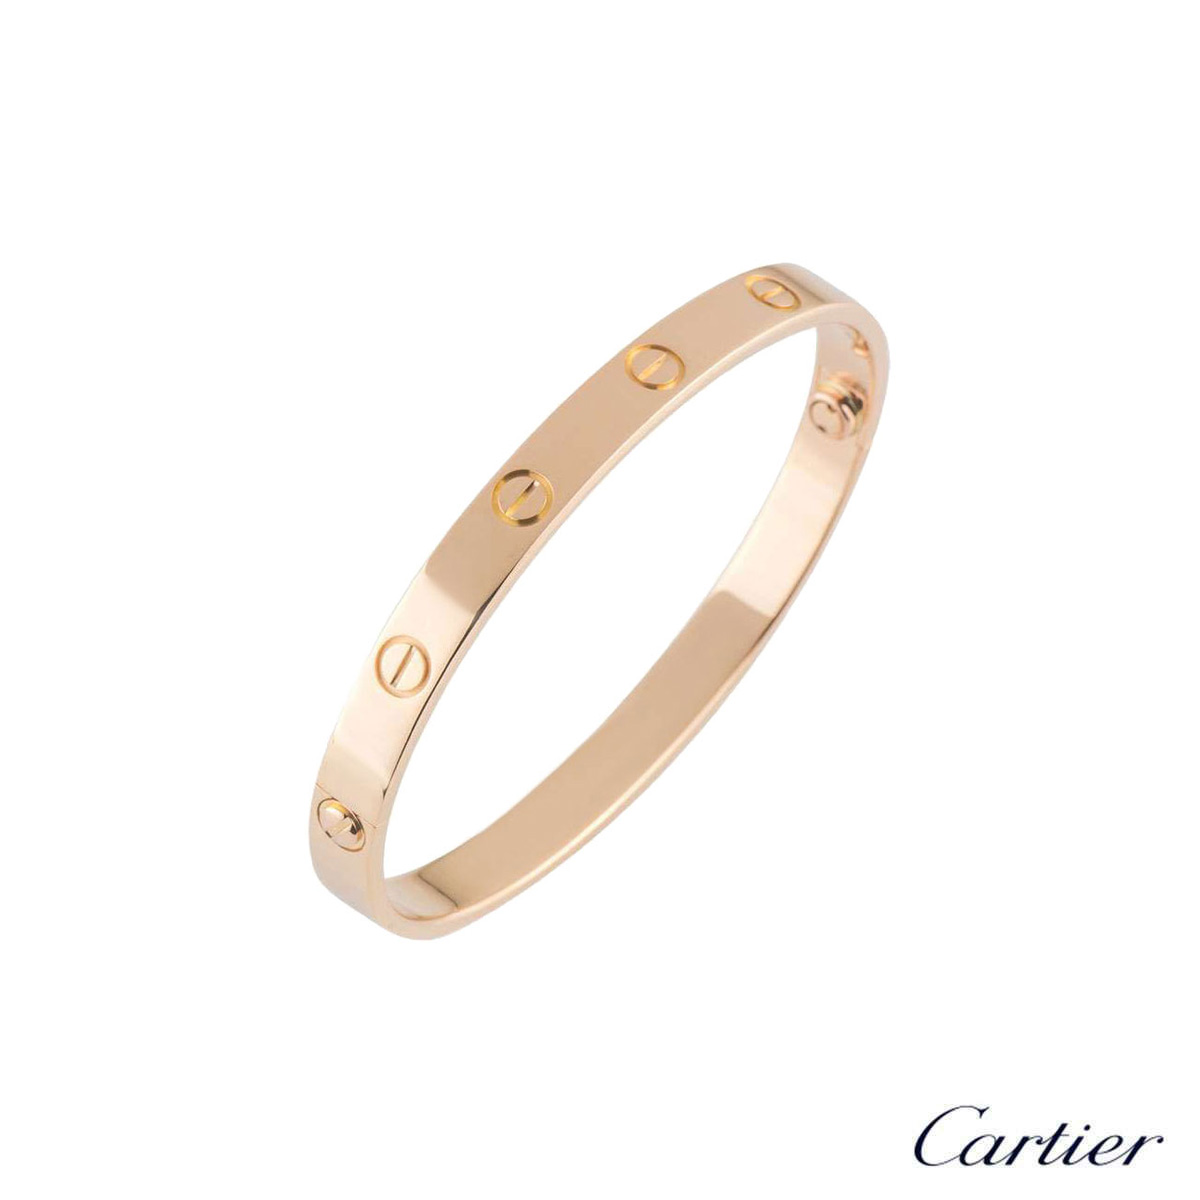 Cartier Love Bracelet Gold Weight Online - www.puzzlewood.net 1694988908